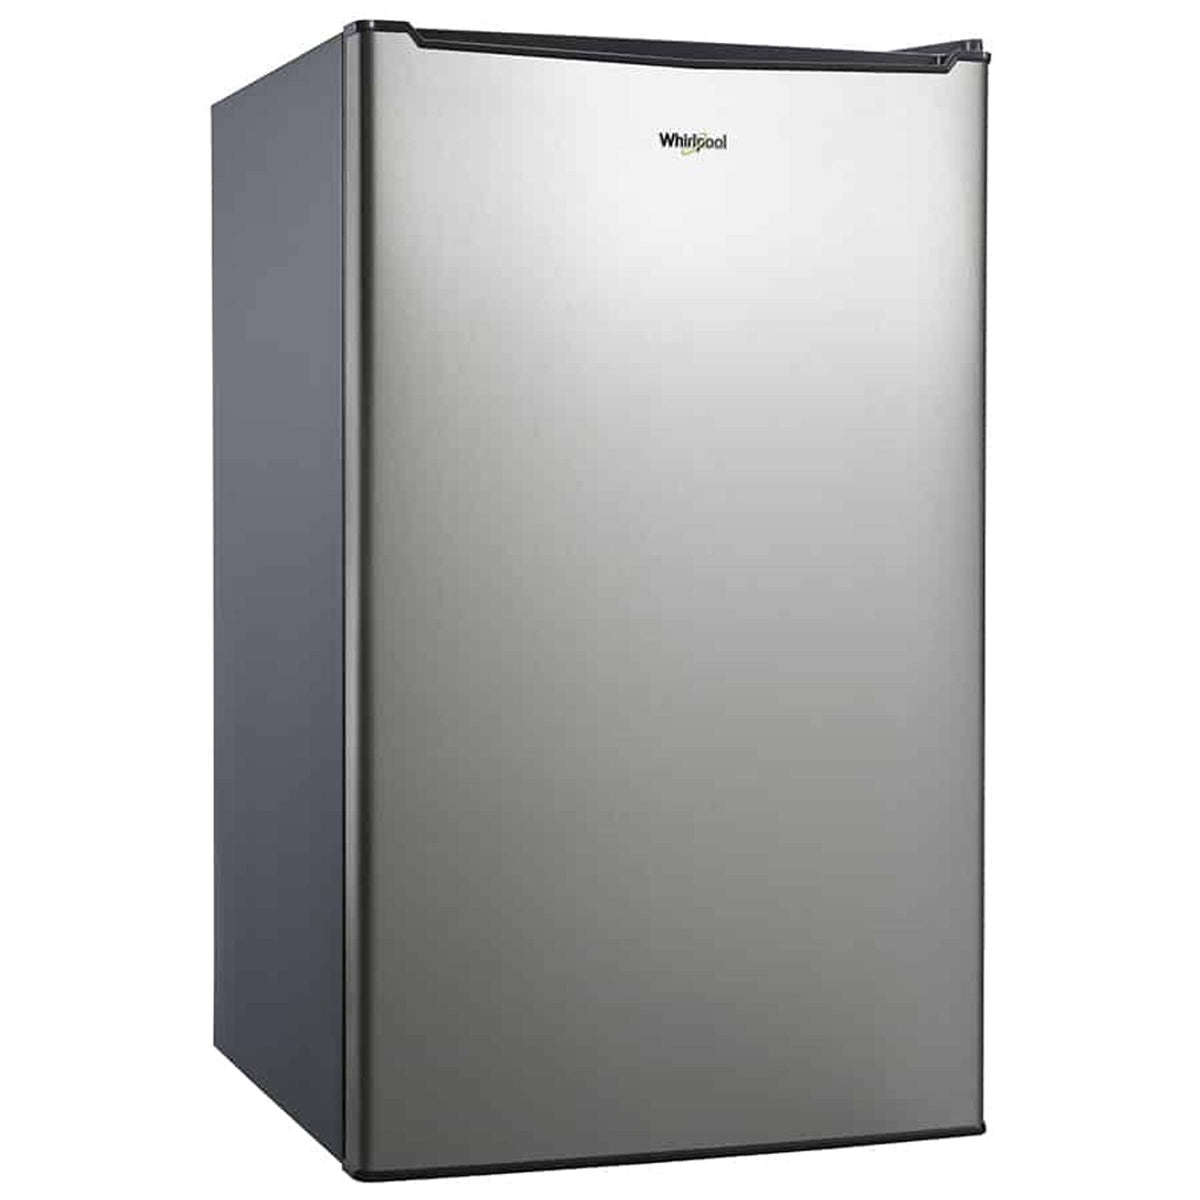 Refrigeradora Whirlpool WS4515S | 4 pies cúbicos | Mini Bar | Acero Inoxidable - Multimax